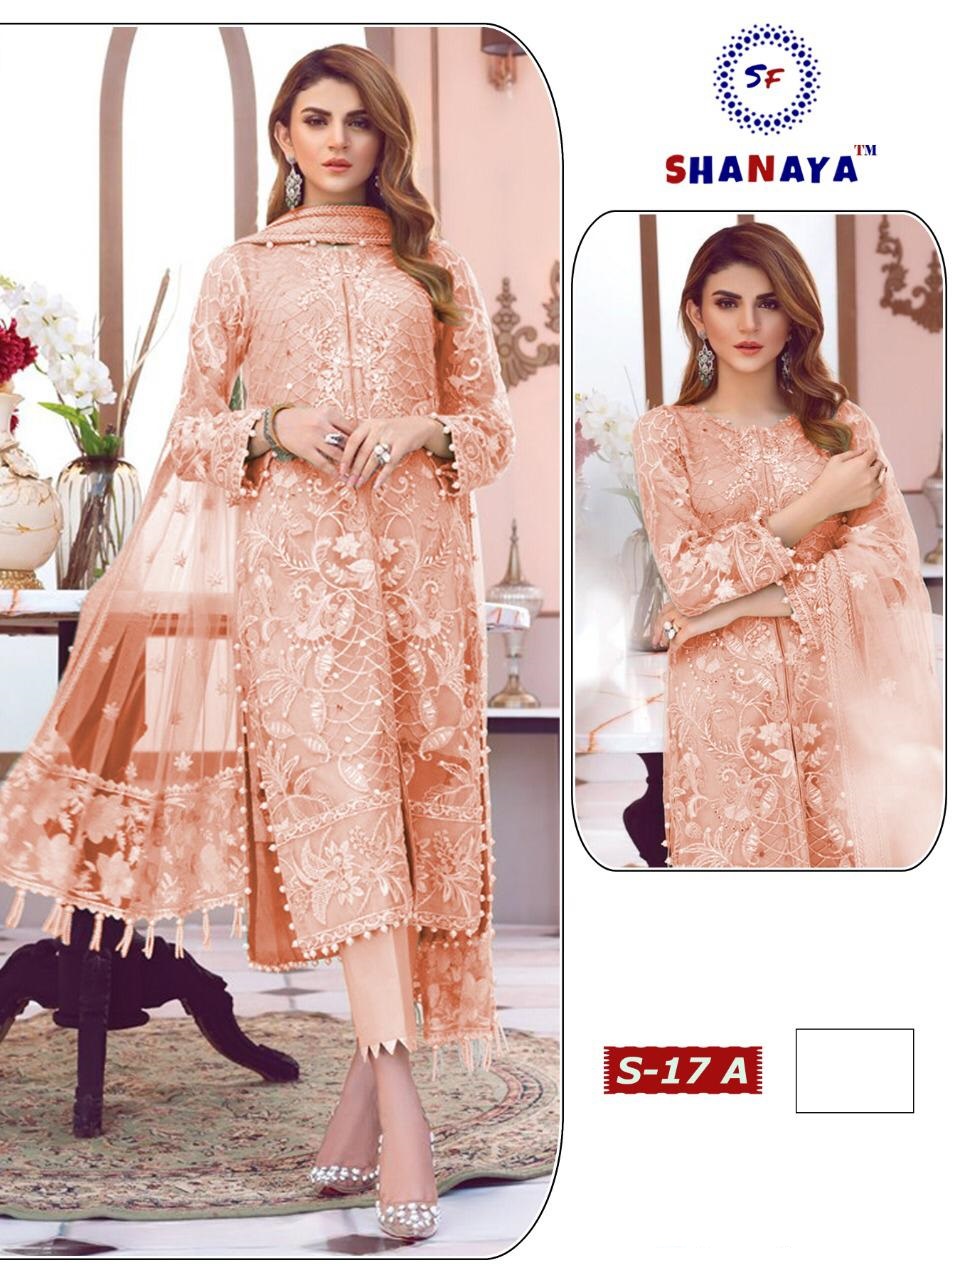 Shanaya Fashion S-17 A